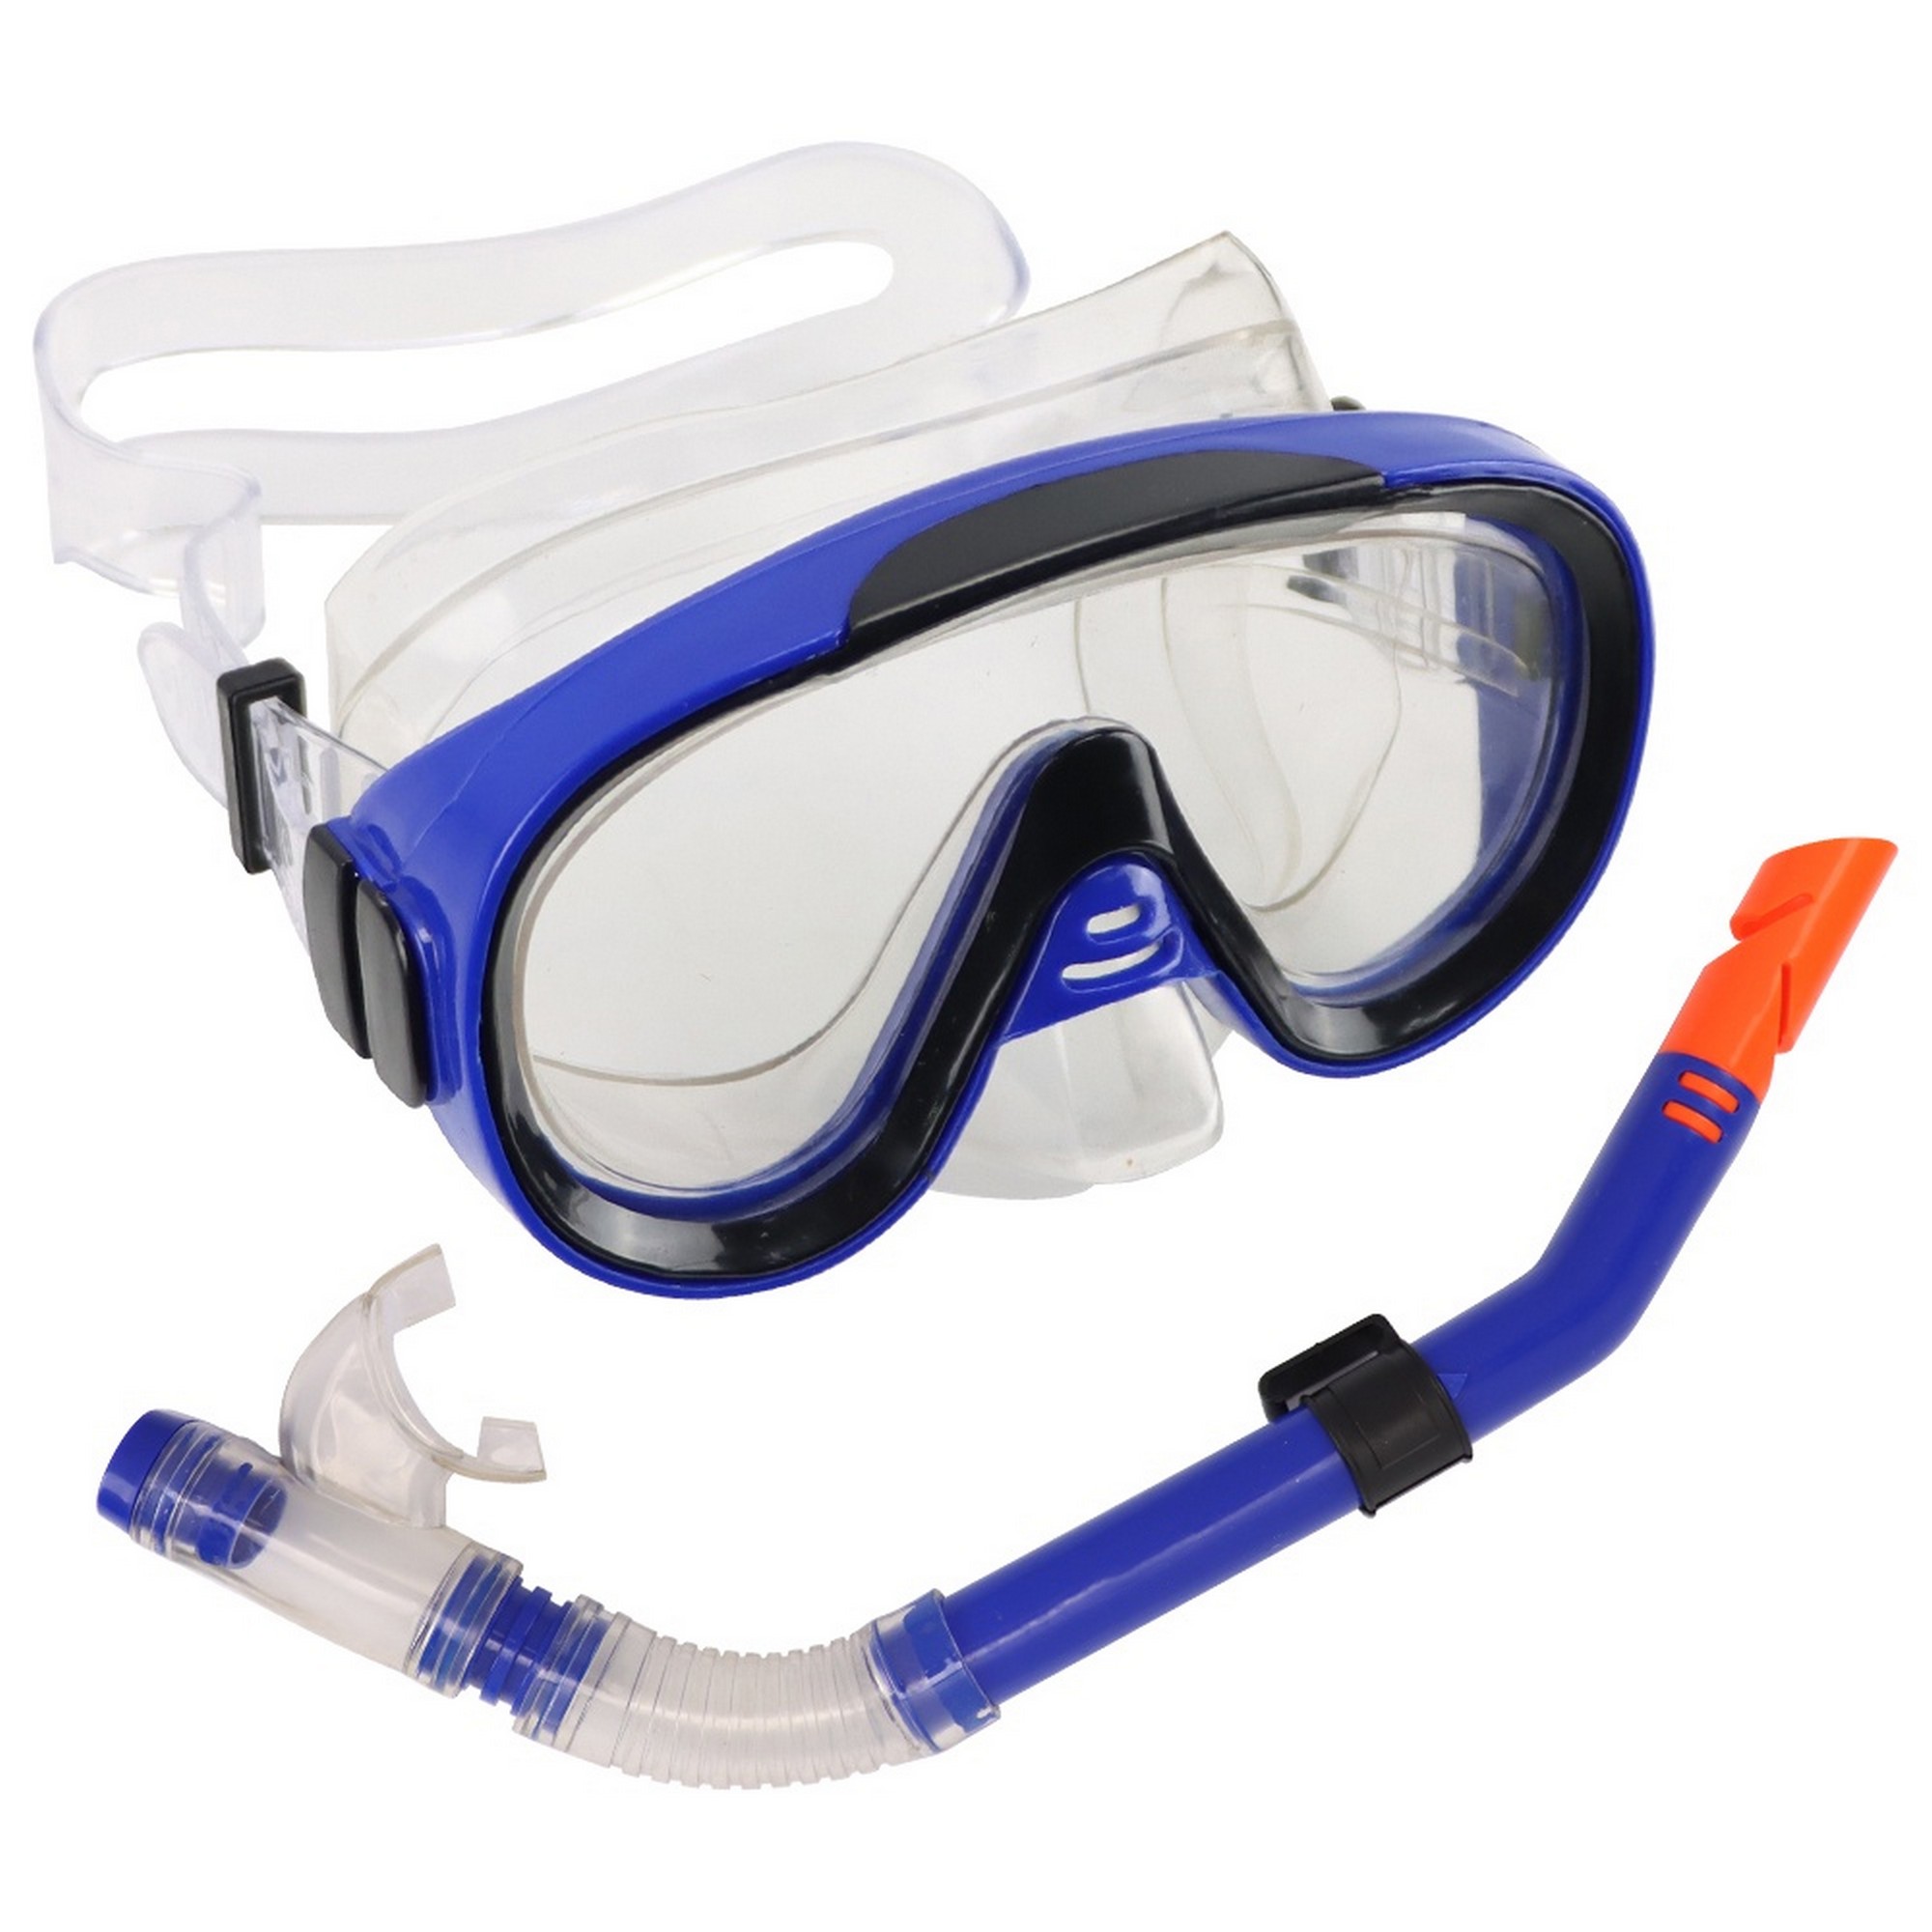 Купить Набор для плавания Sportex юниорский, маска+трубка (ПВХ) E39246-1 синий,